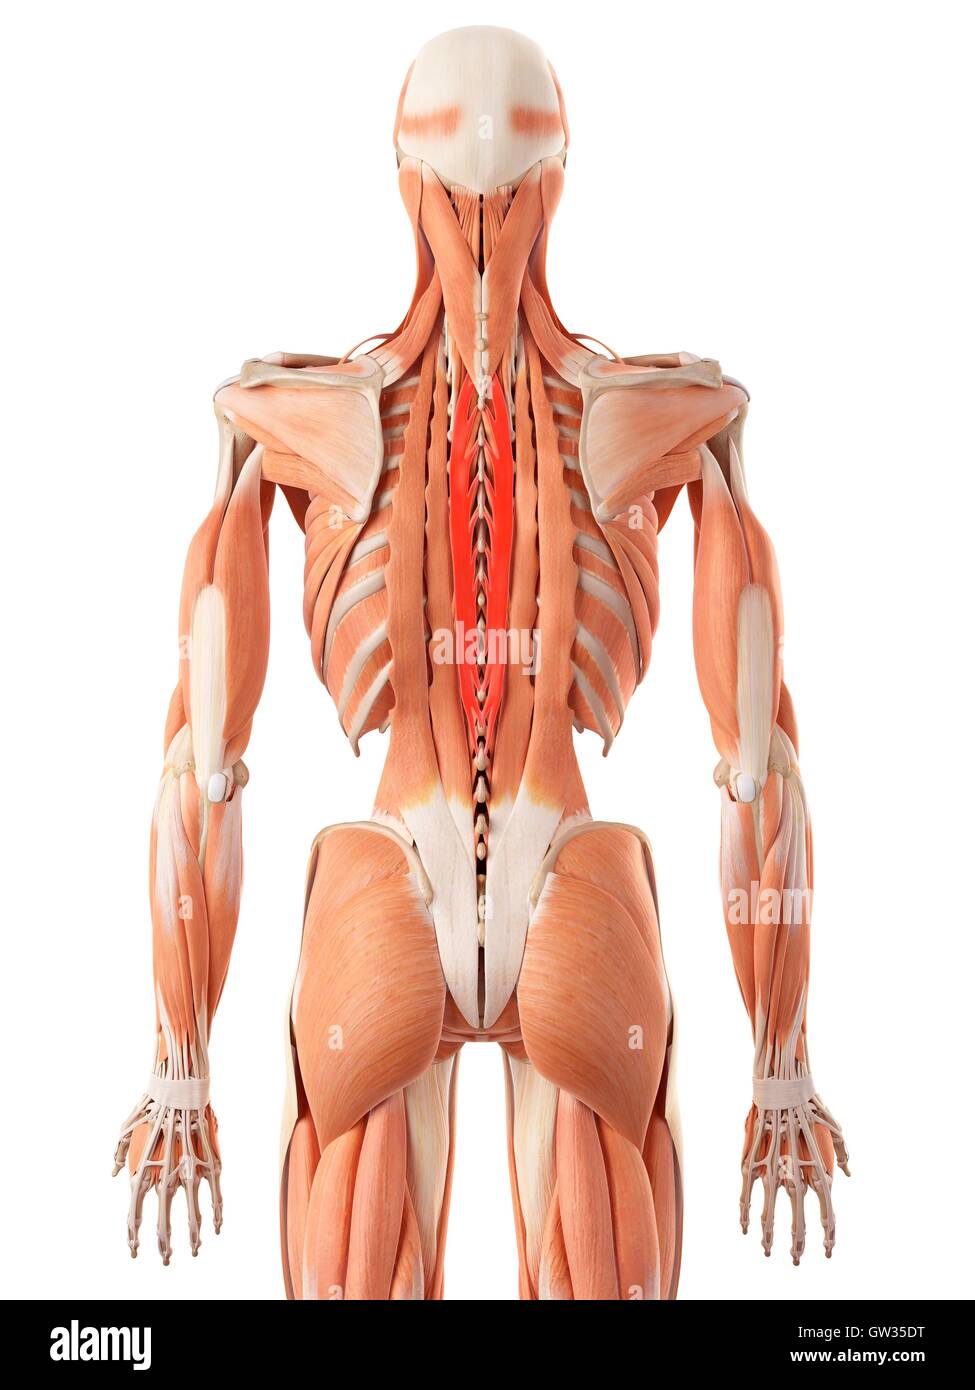 Human back muscles, illustration. Stock Photo